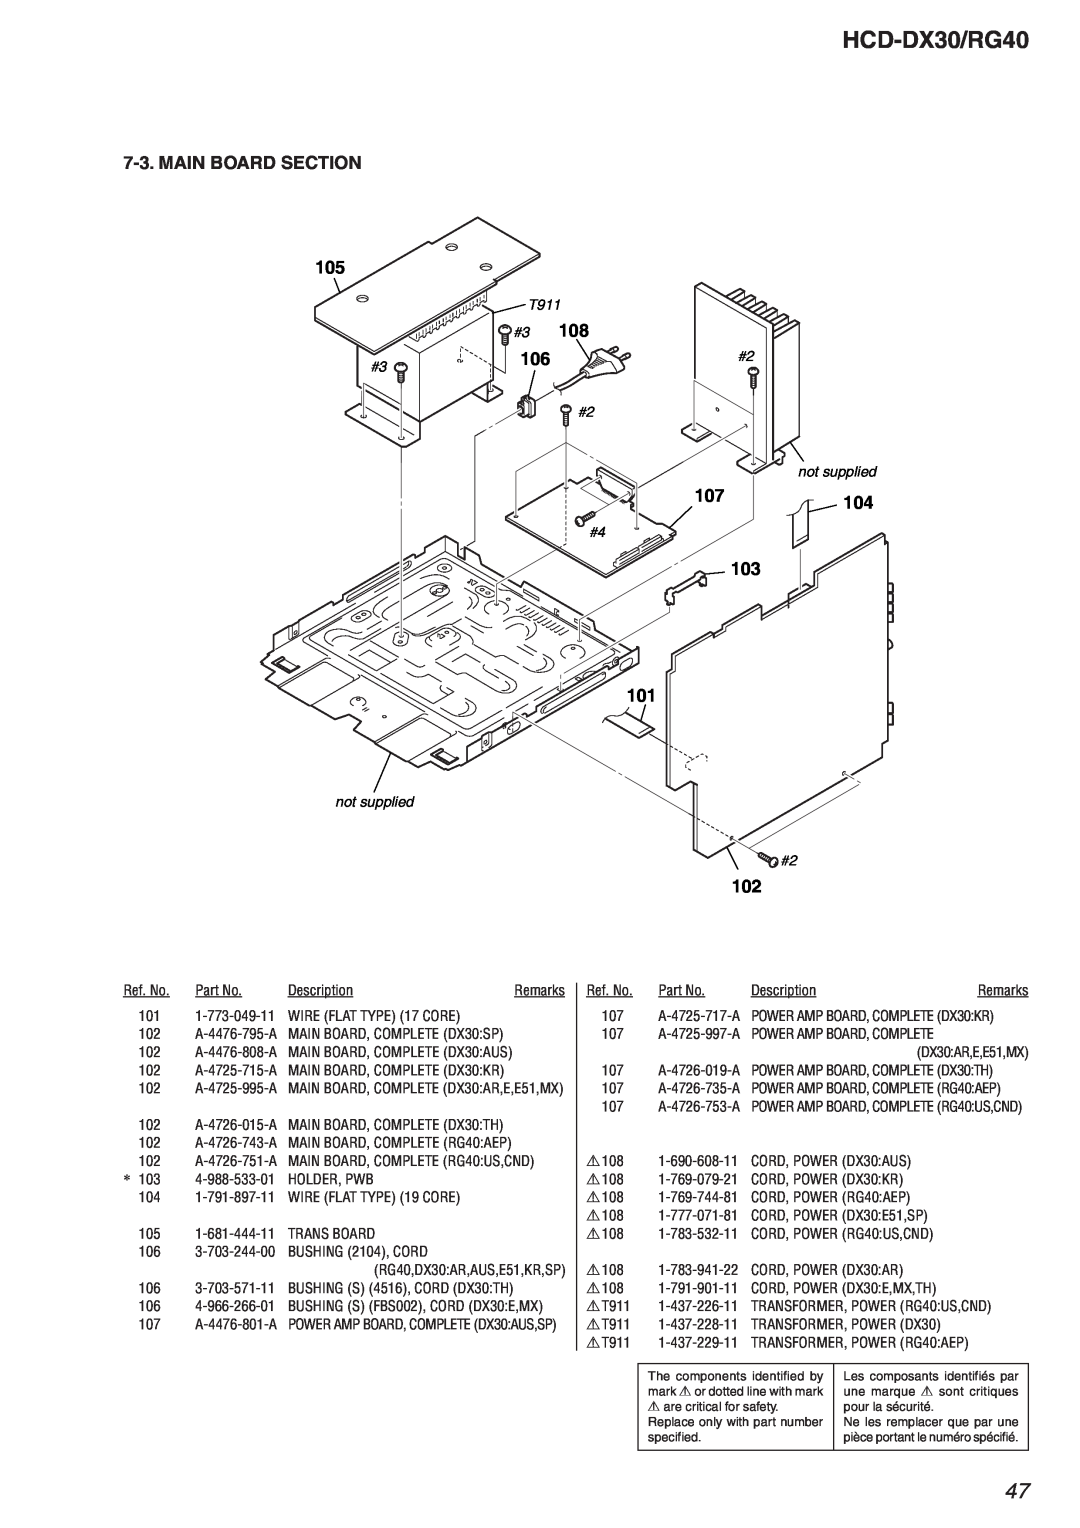 Sony HCD-RG40 specifications HCD-DX30/RG40, Main Board, 107104, 103 101 